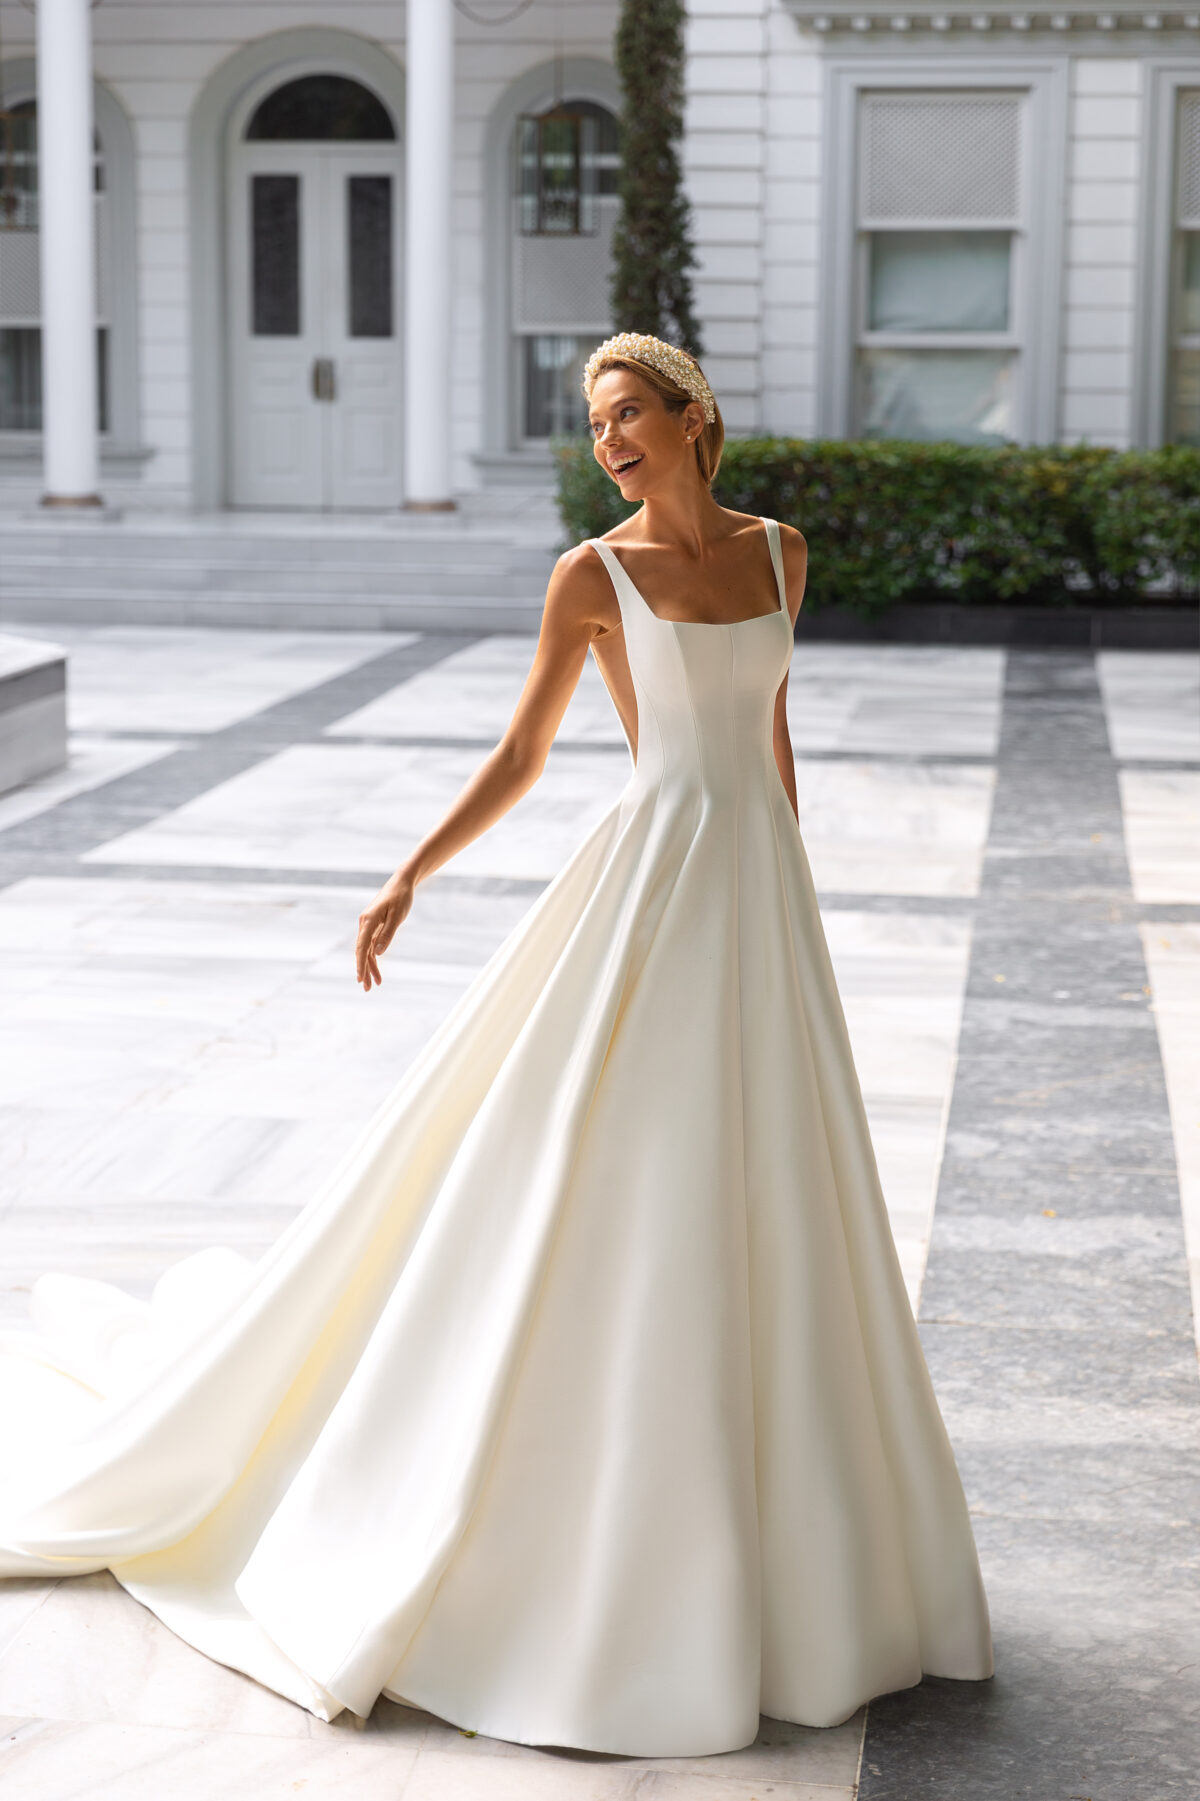 Alysse by Pollardi wedding dress trends